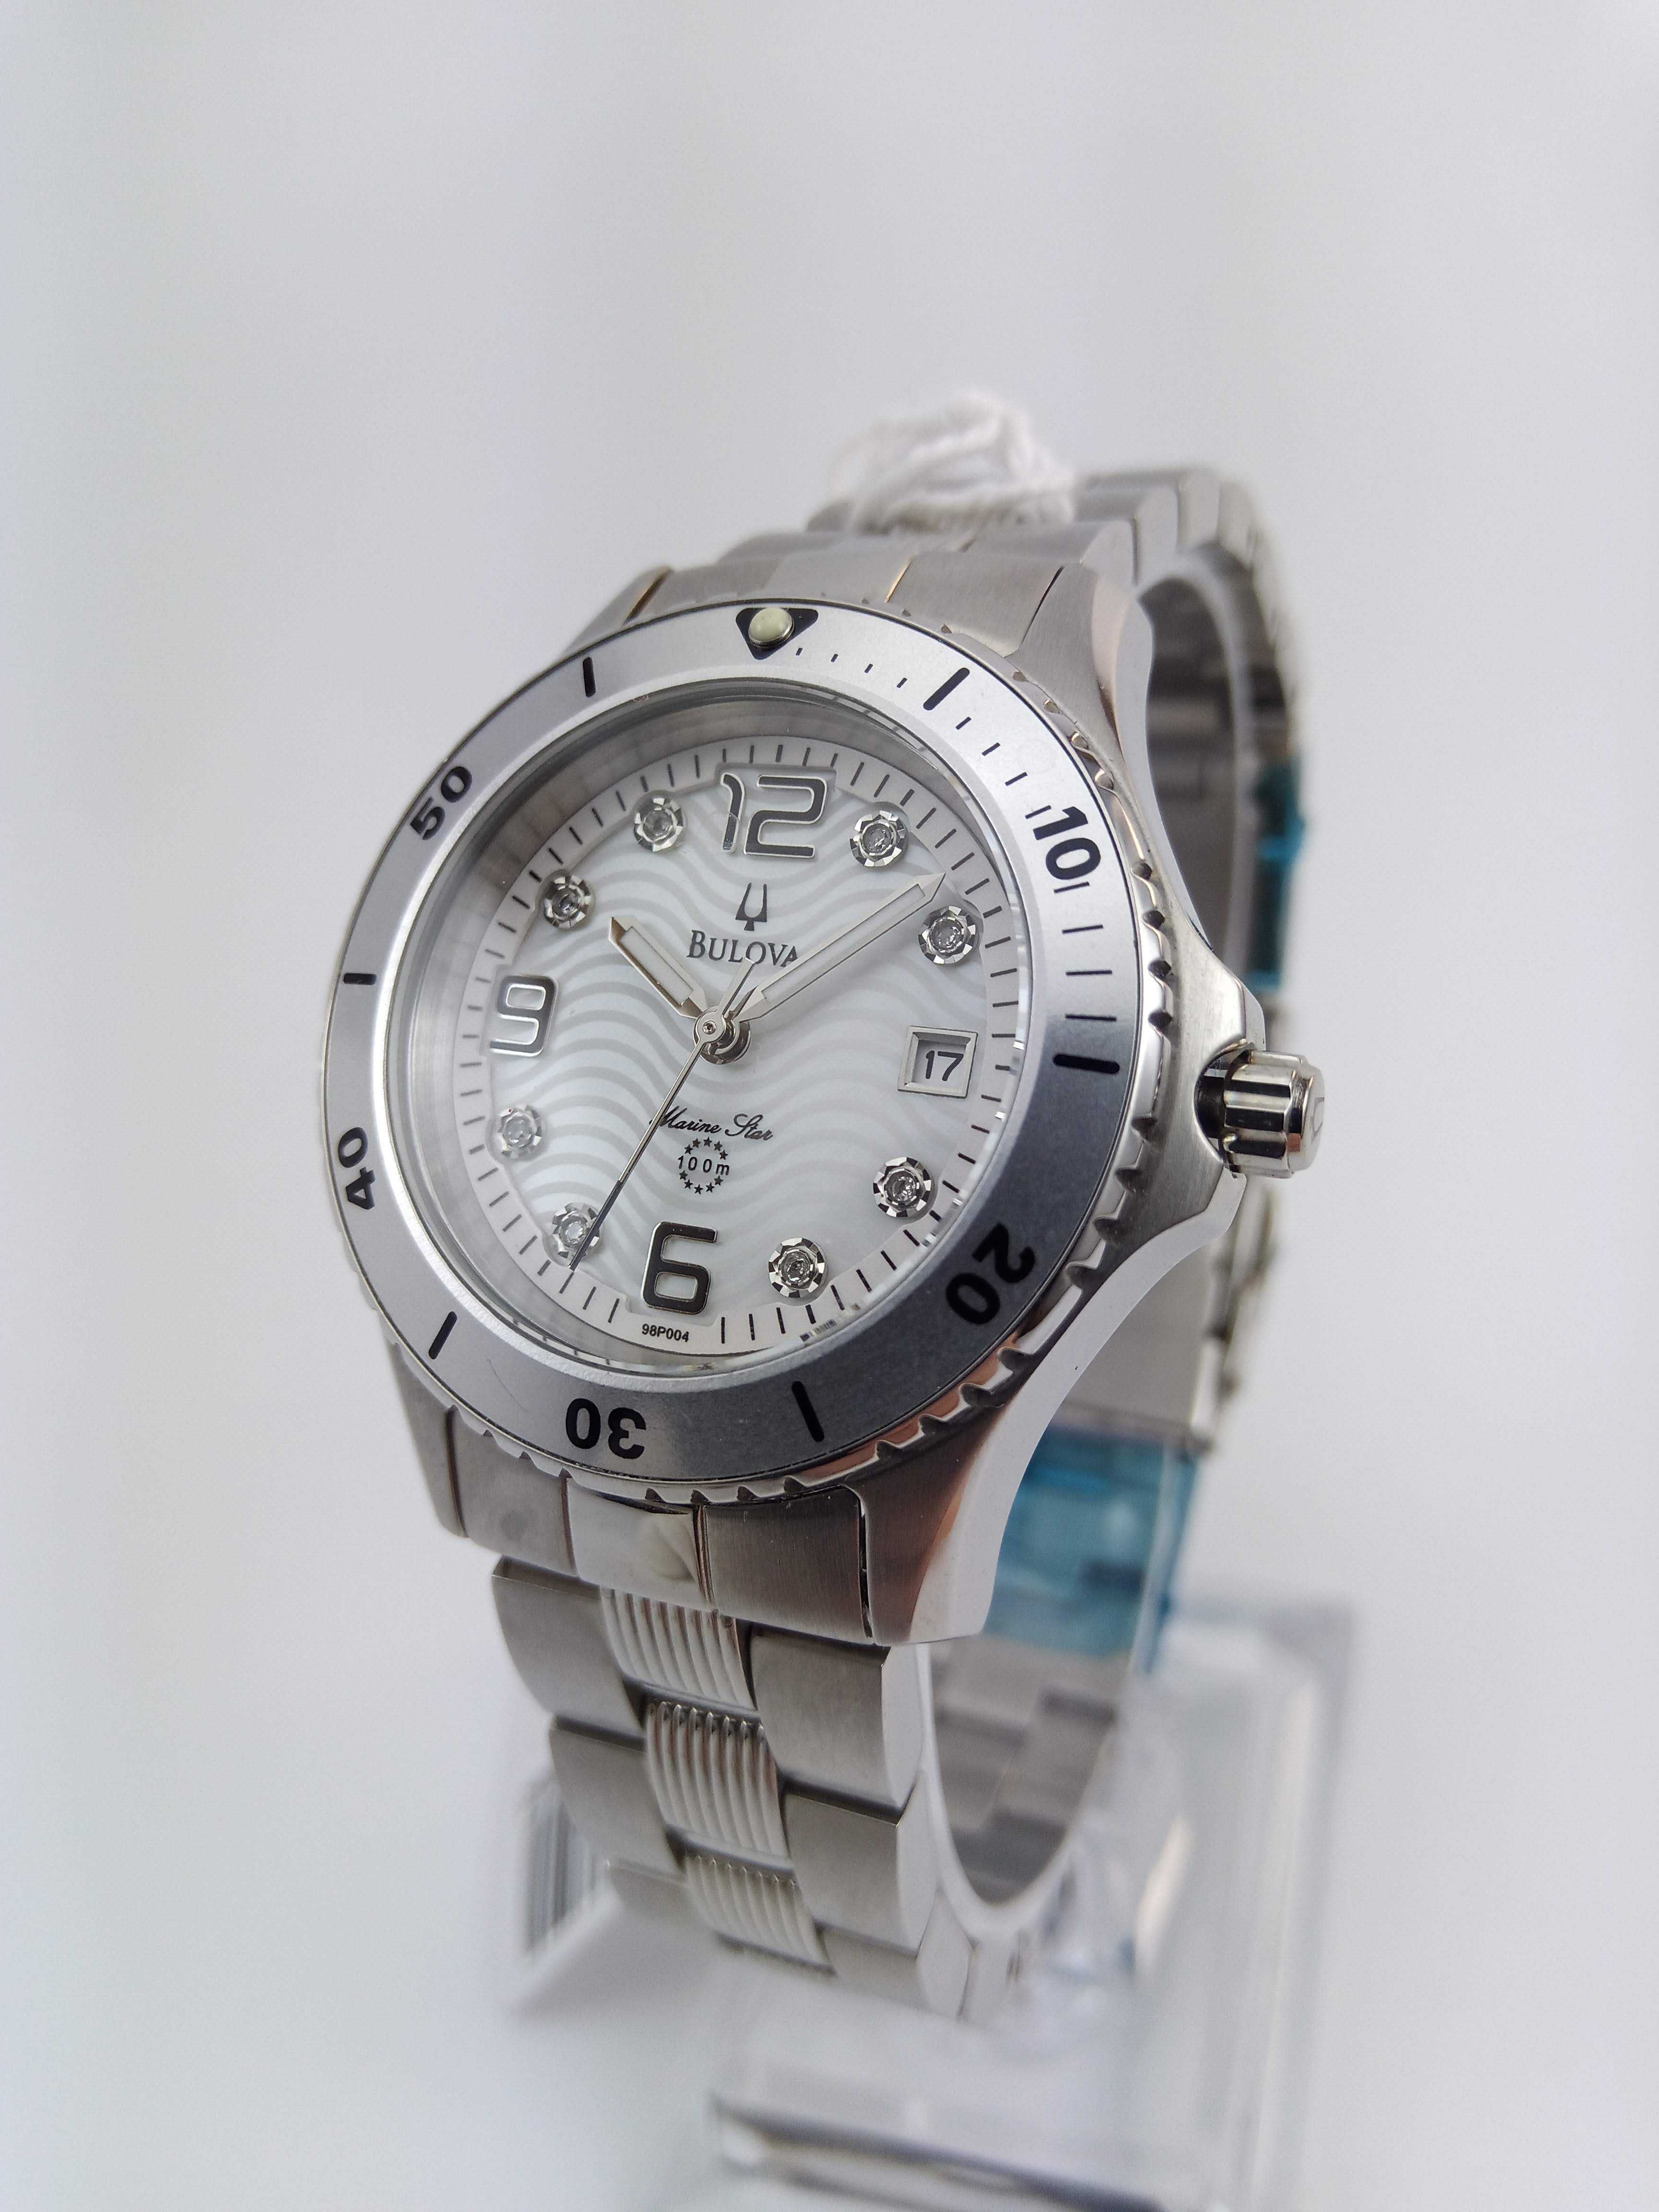 Шикарные женские часы с бриллиантами Bulova MARINE STAR 98P004 морские